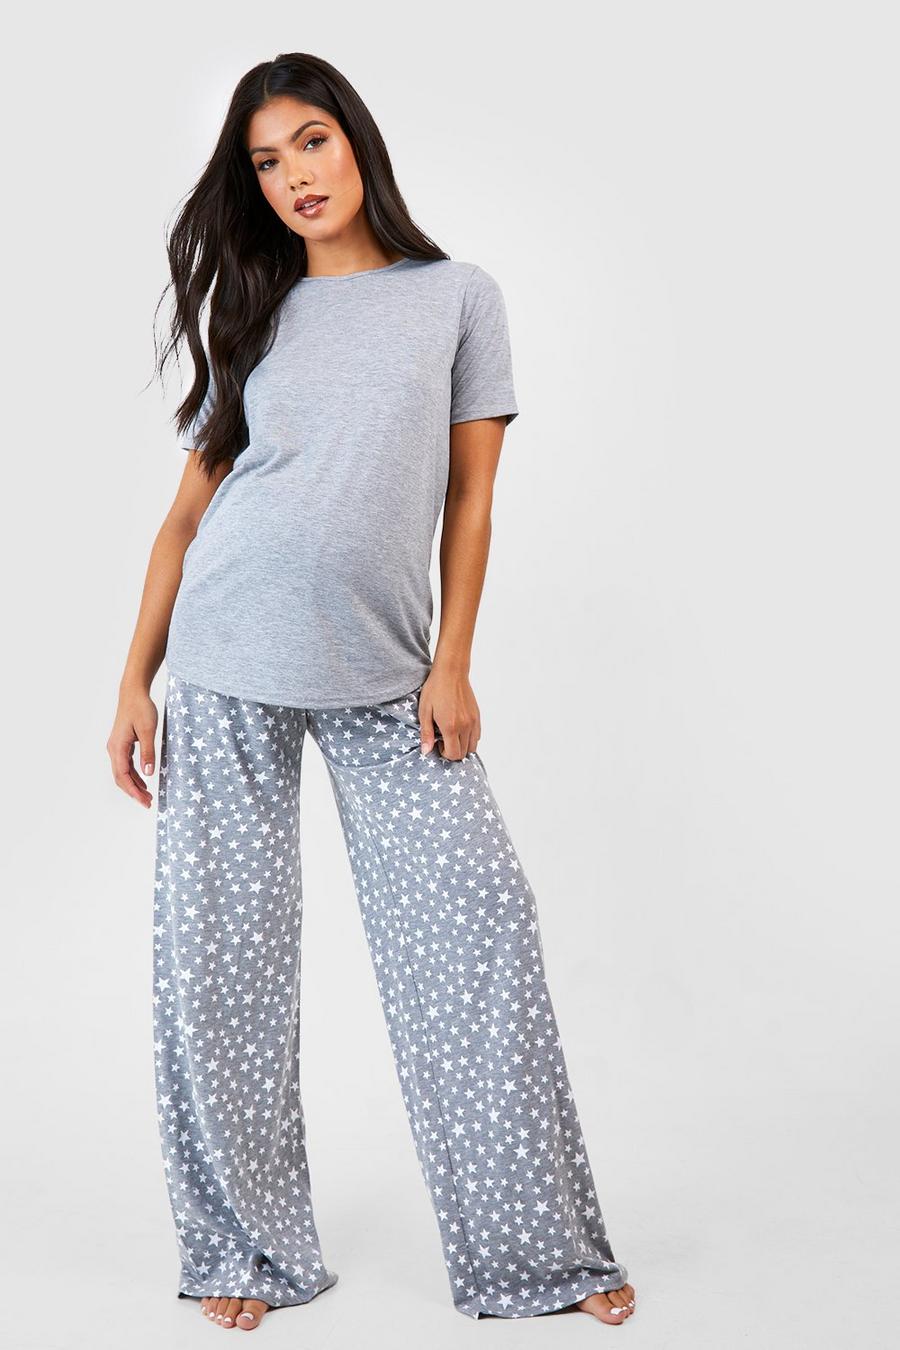 Umstandsmode Pyjama-Set mit Sternen-Print, Grey